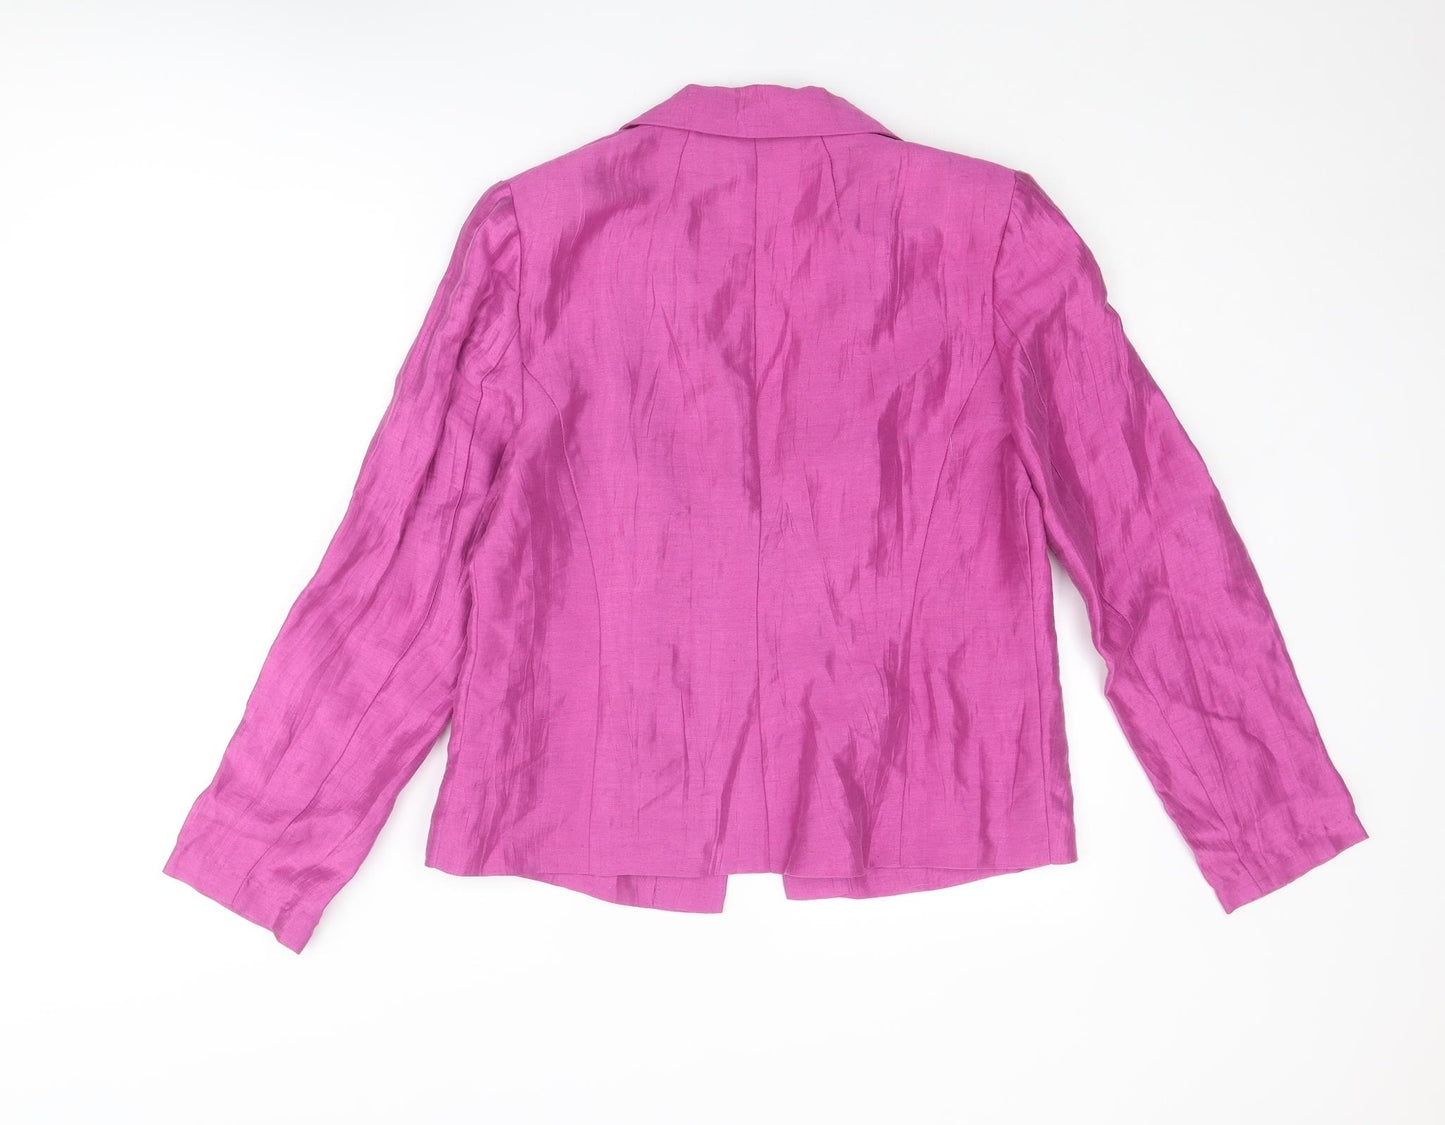 Viyella Womens Pink Jacket Blazer Size 12 Button